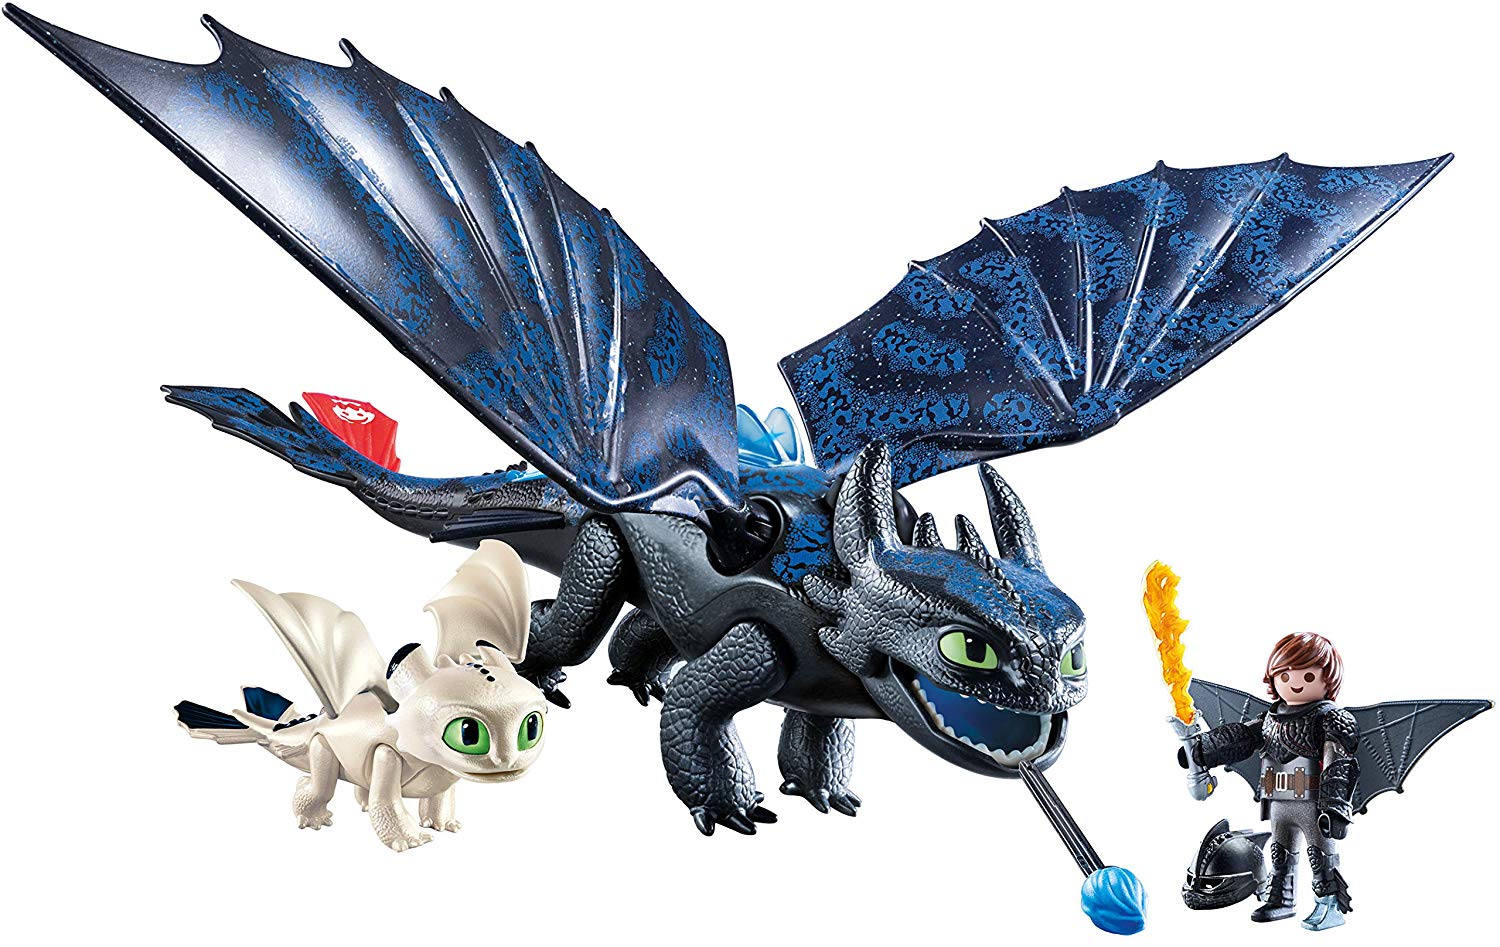 jouet playmobil dragon